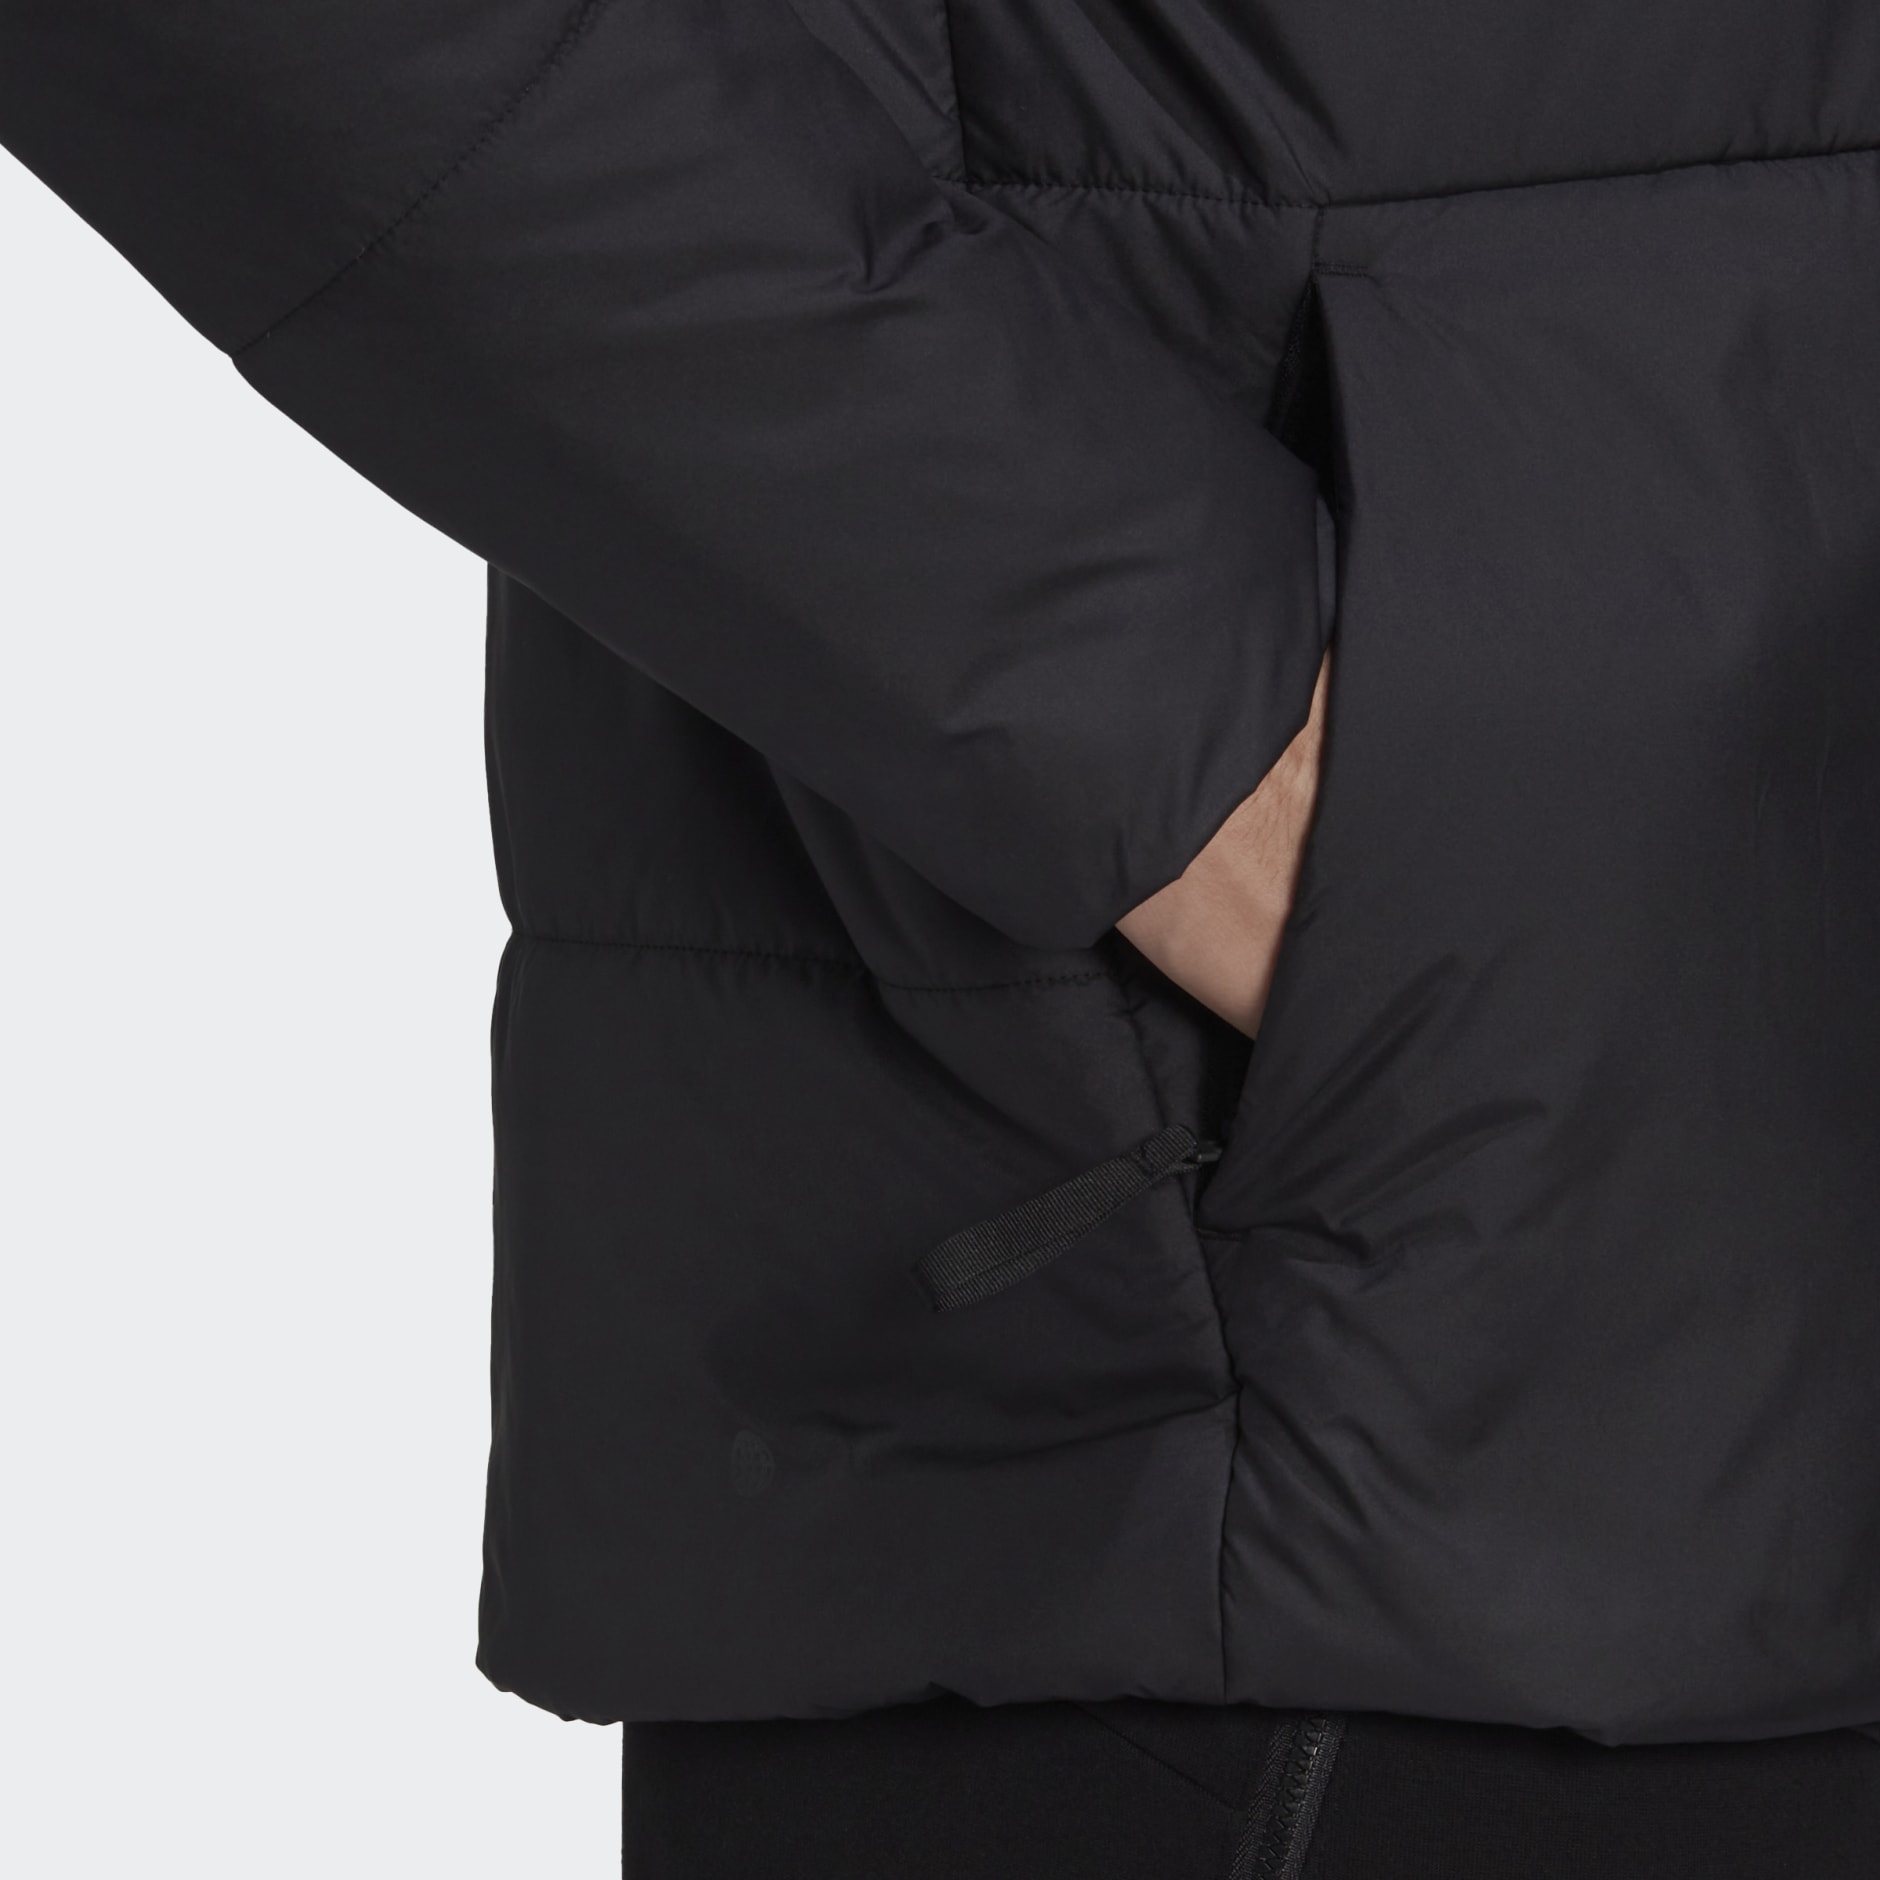 GH Black | BSC adidas Jacket 3-Stripes - Insulated adidas